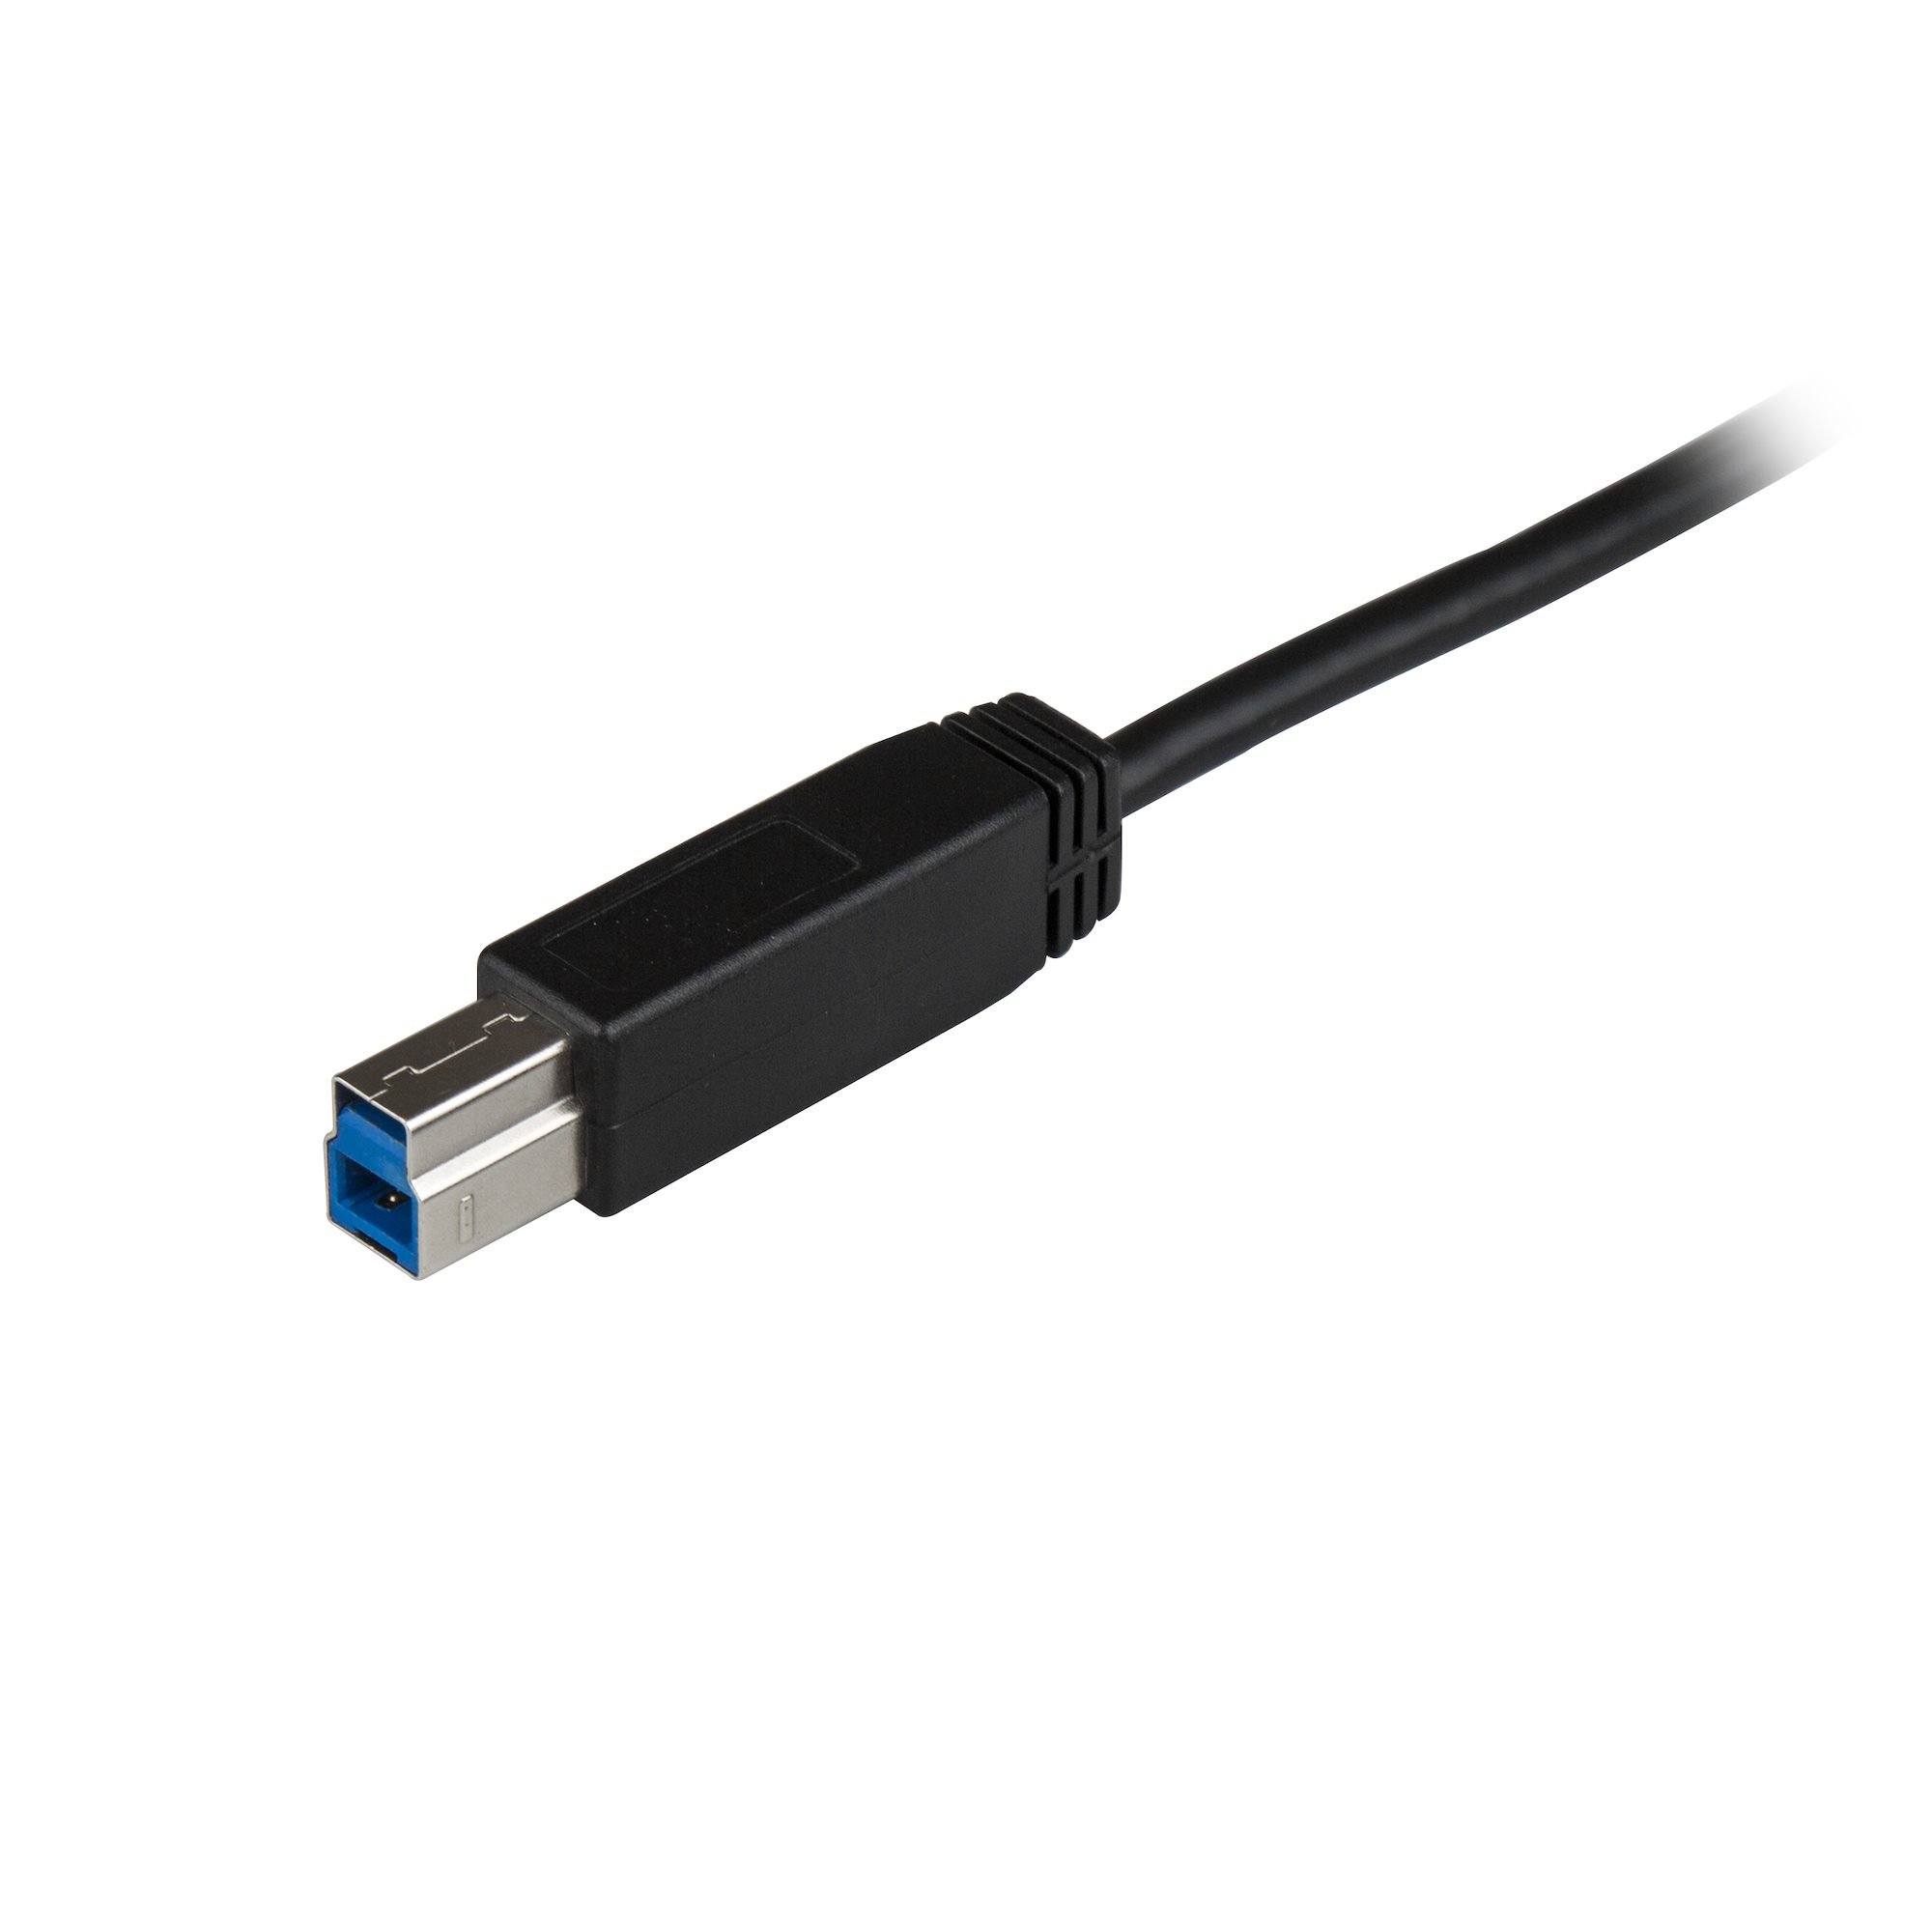 Cable USB C to USB B 1m USB 3.1 Cables | StarTech.com